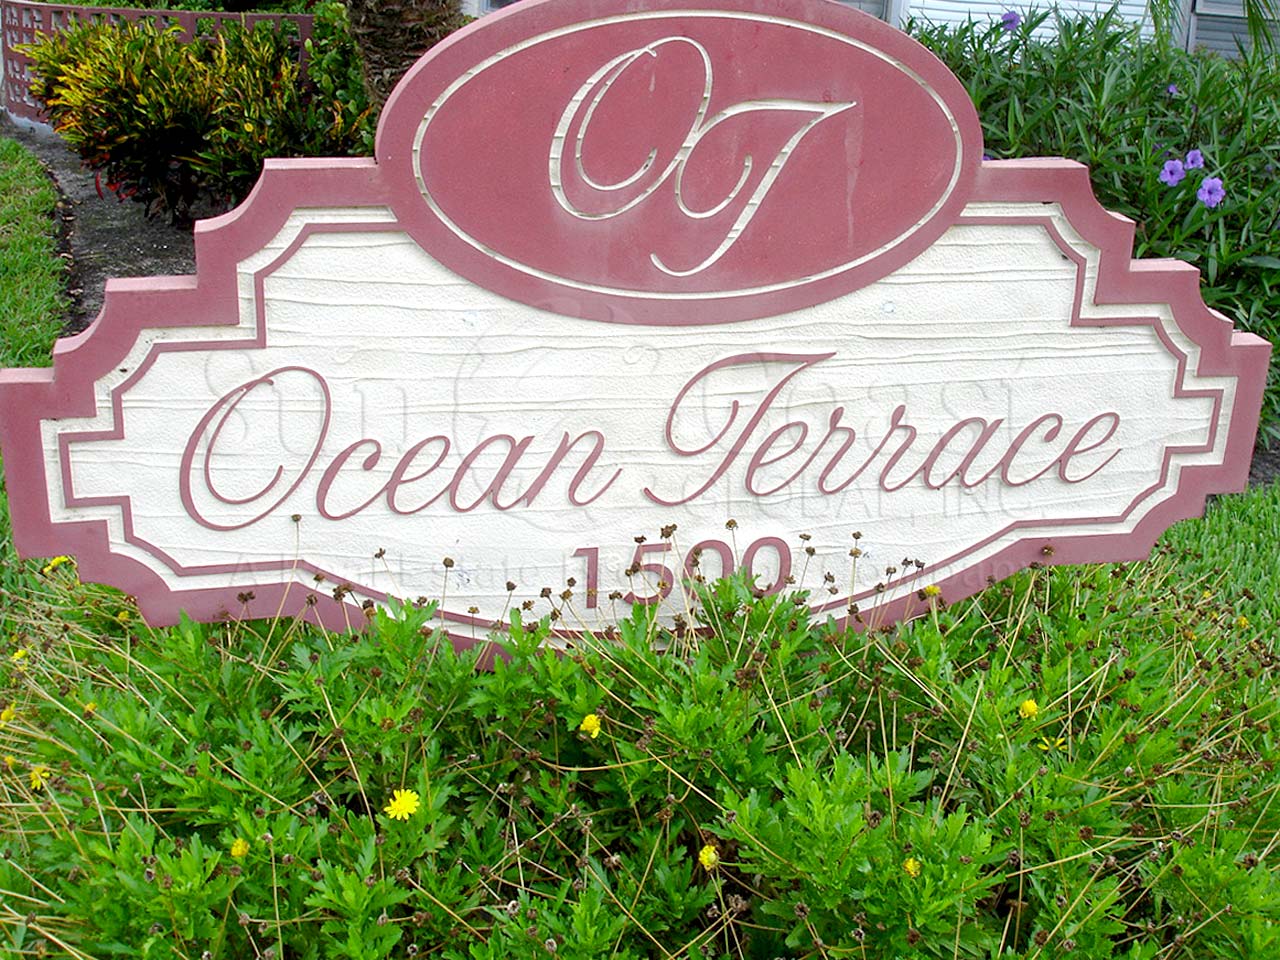 Ocean Terrace Signage